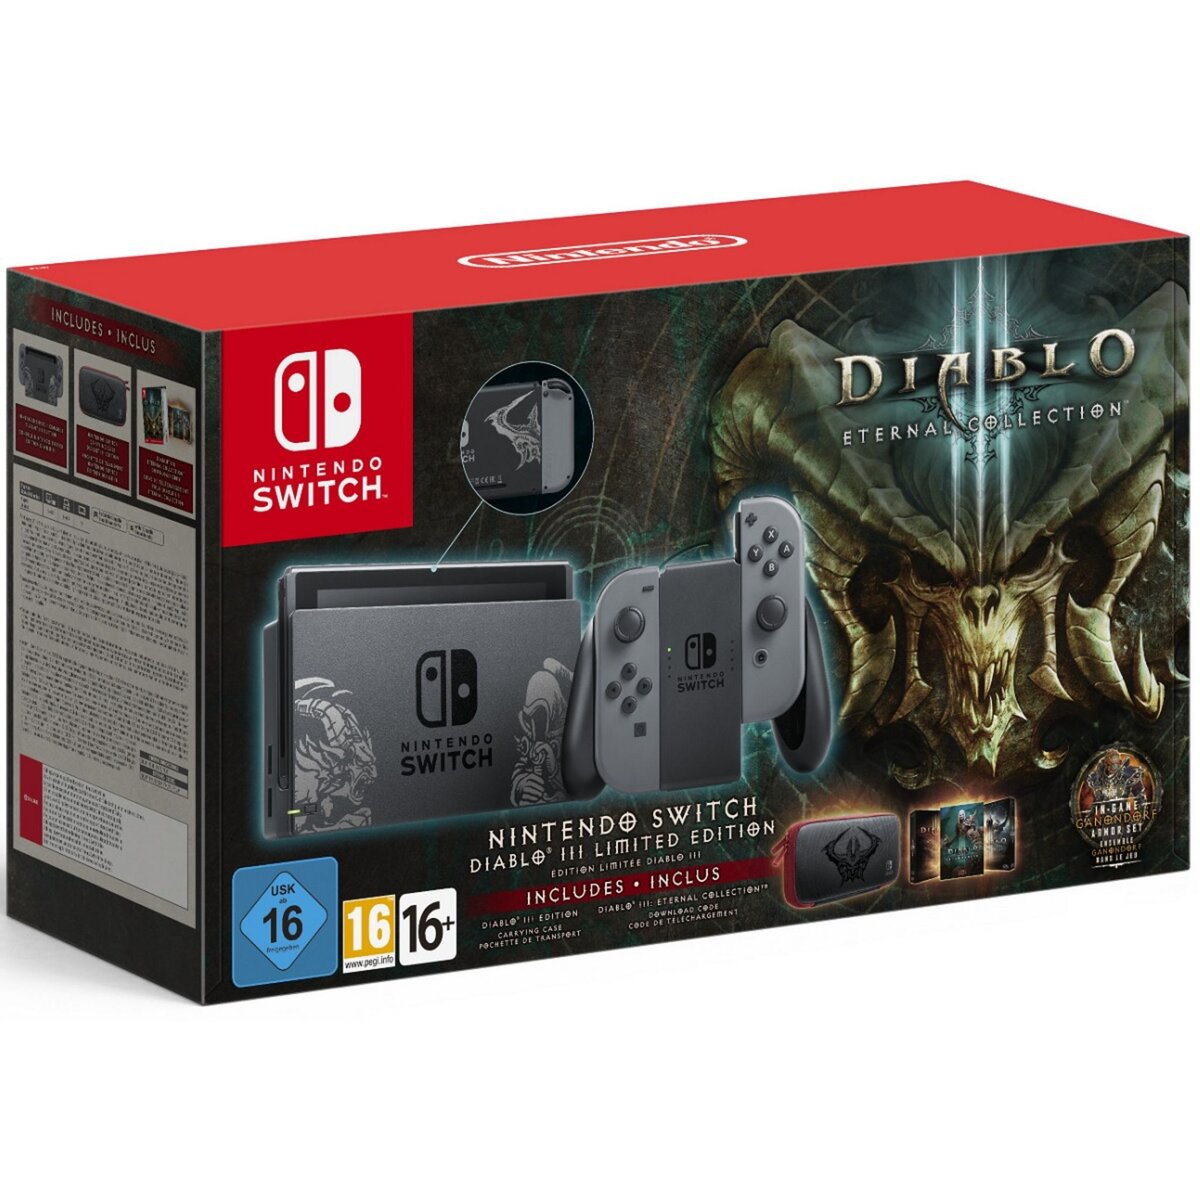 Console Nintendo Switch Diablo III Edition limitée